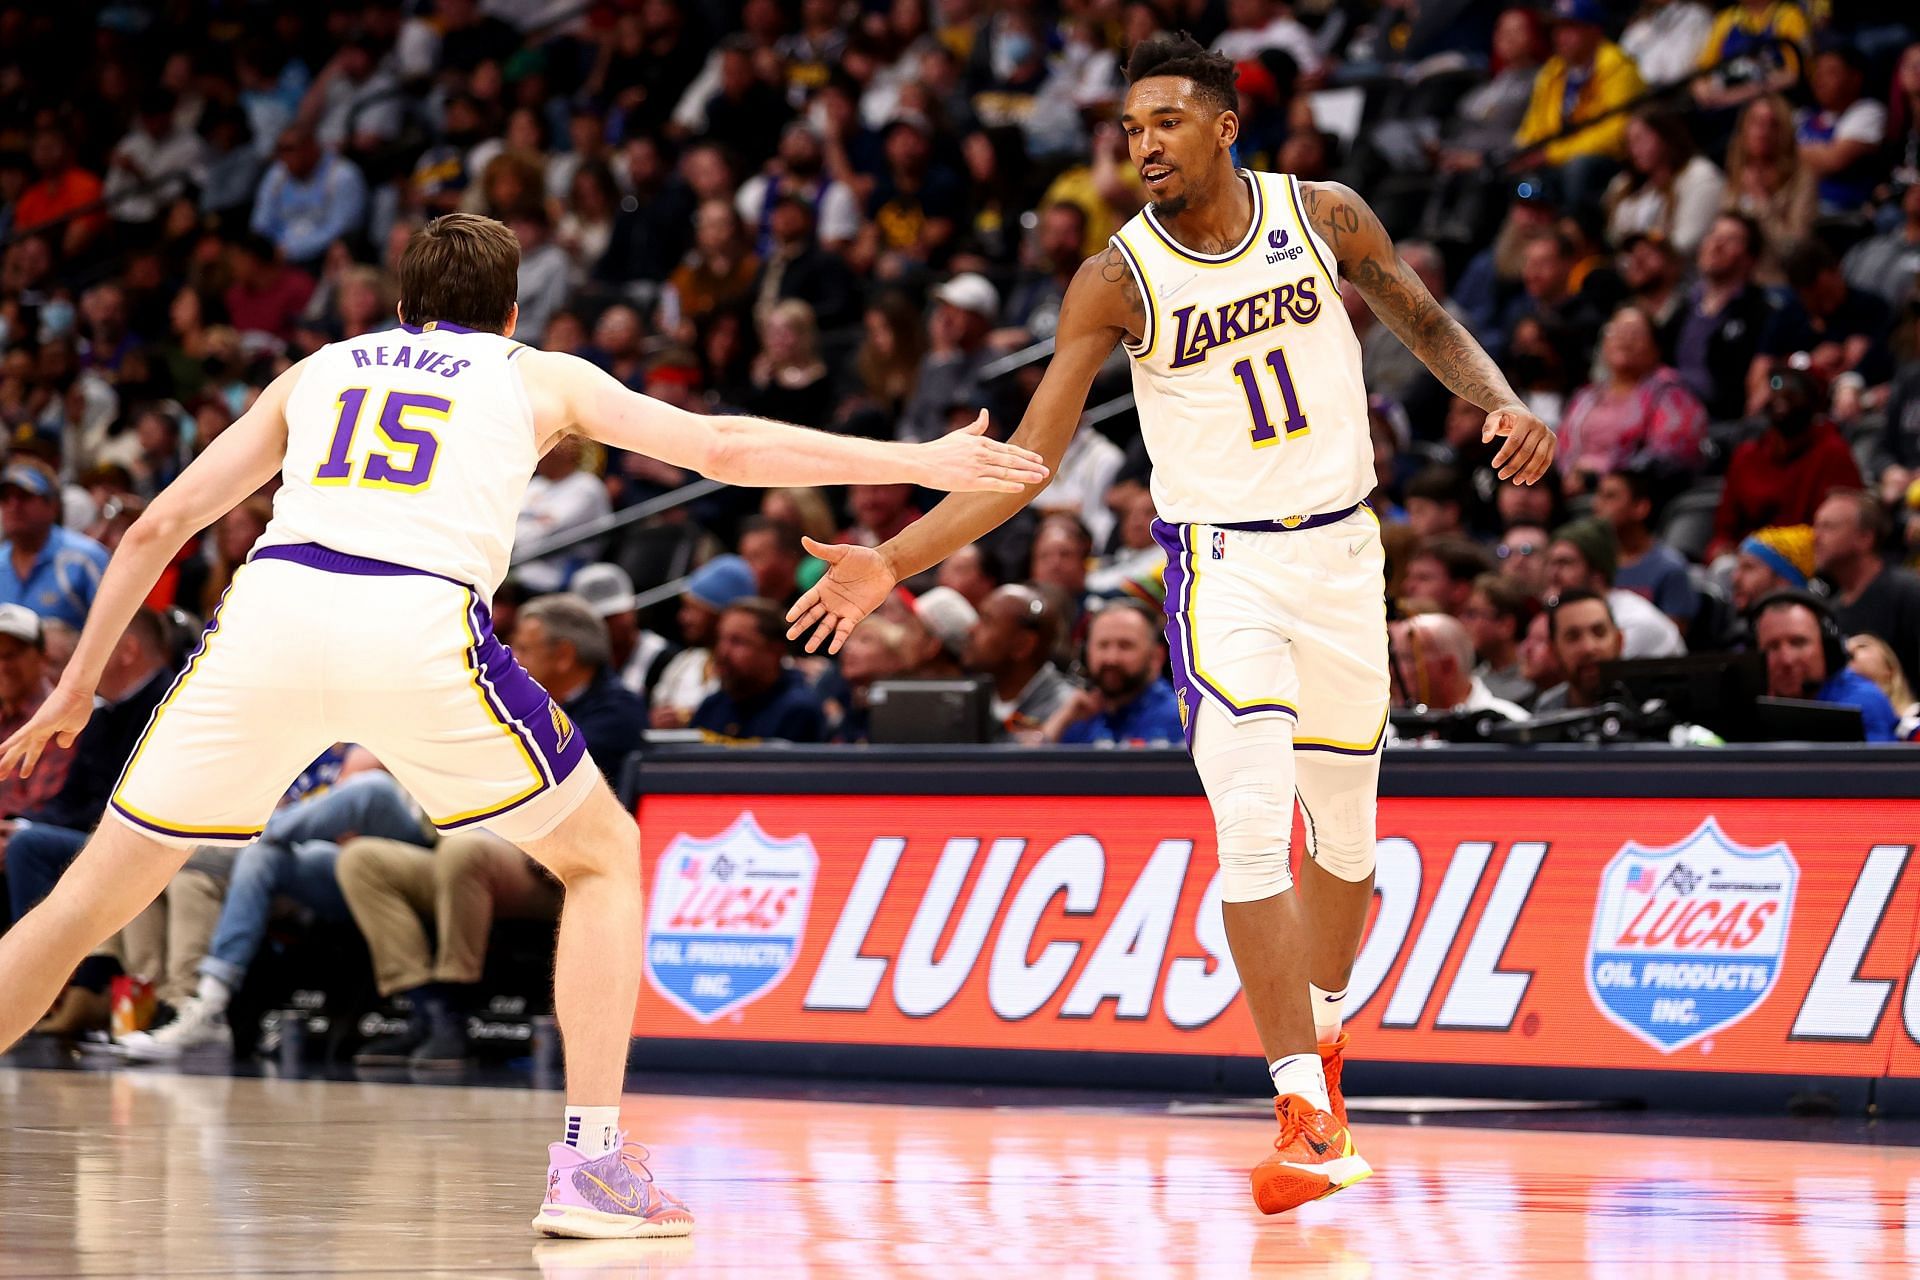 Los Angeles Lakers vs Denver Nuggets